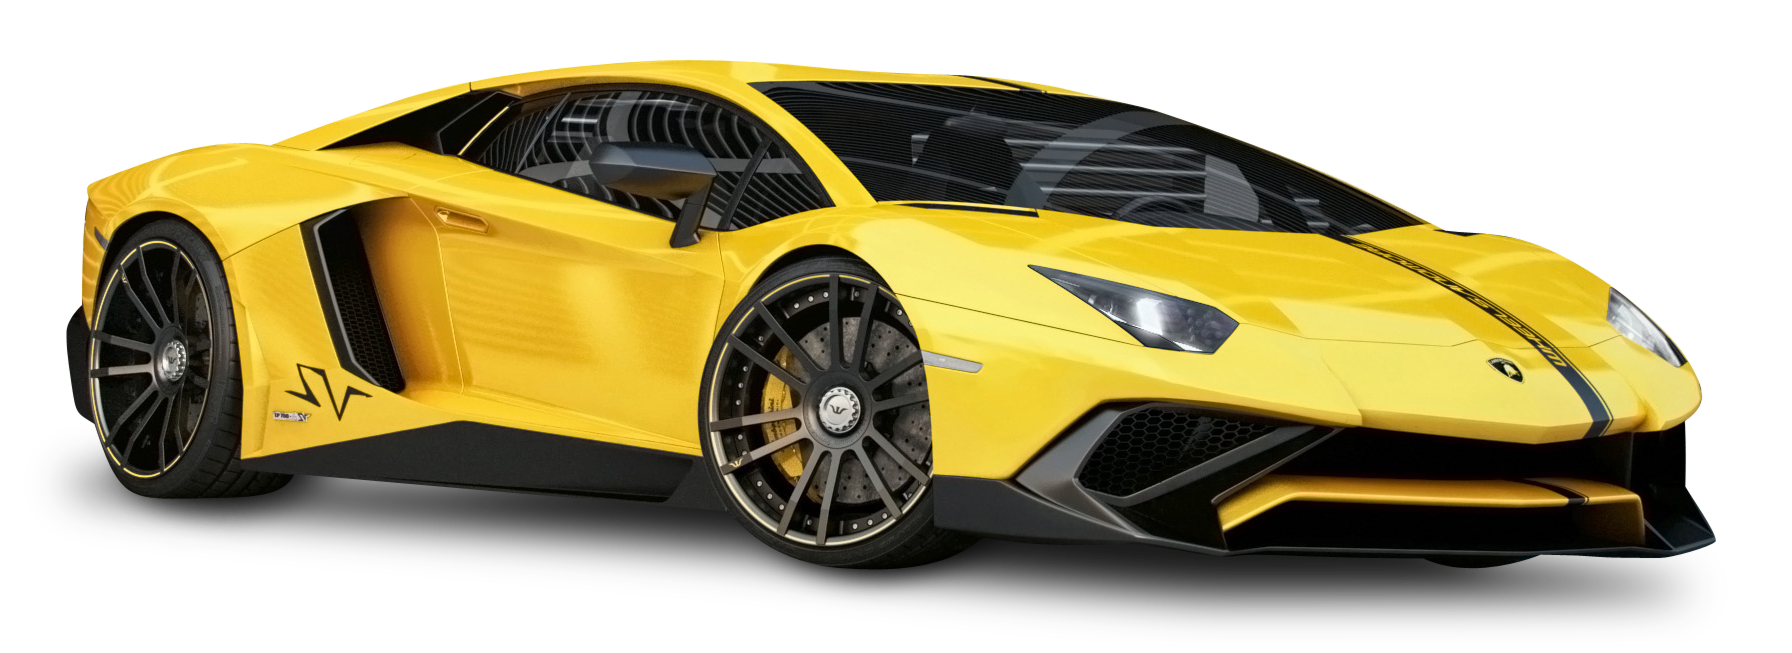 lamborghini aventador yellow car png image pngpix #25561